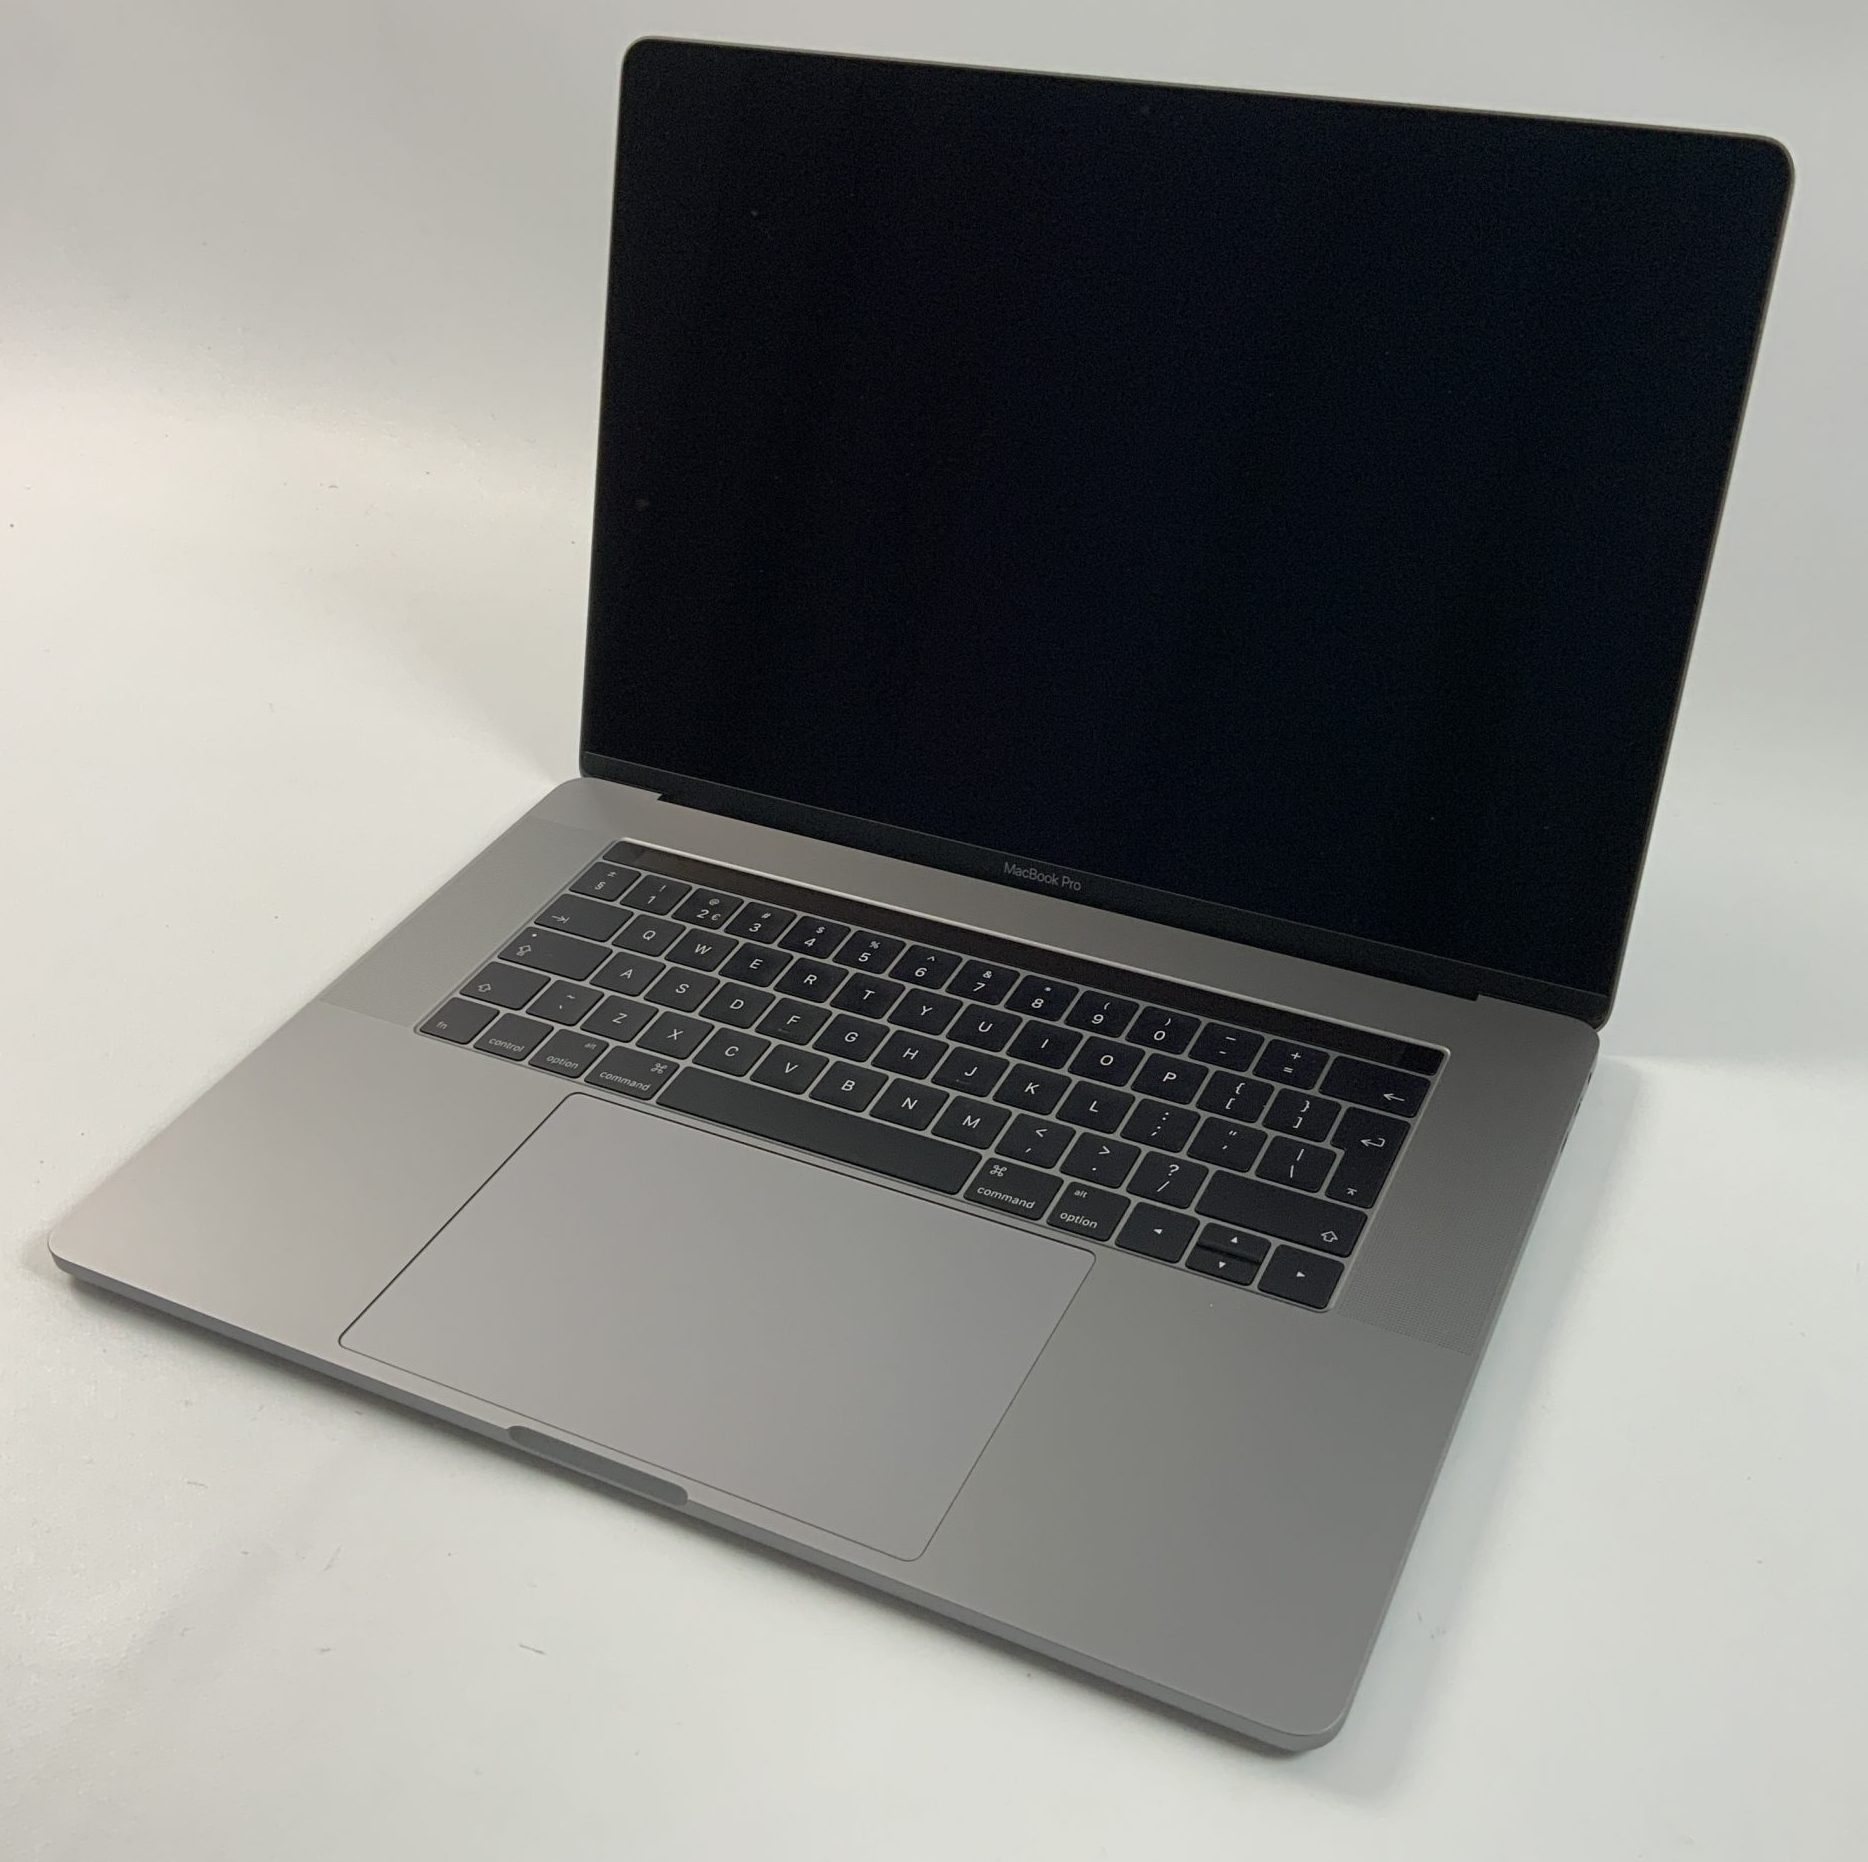 MacBook Pro 15" Touch Bar Late 2016 (Intel Quad-Core i7 2.6 GHz 16 GB RAM 256 GB SSD), Silver, Intel Quad-Core i7 2.6 GHz, 16 GB RAM, 256 GB SSD, imagen 1